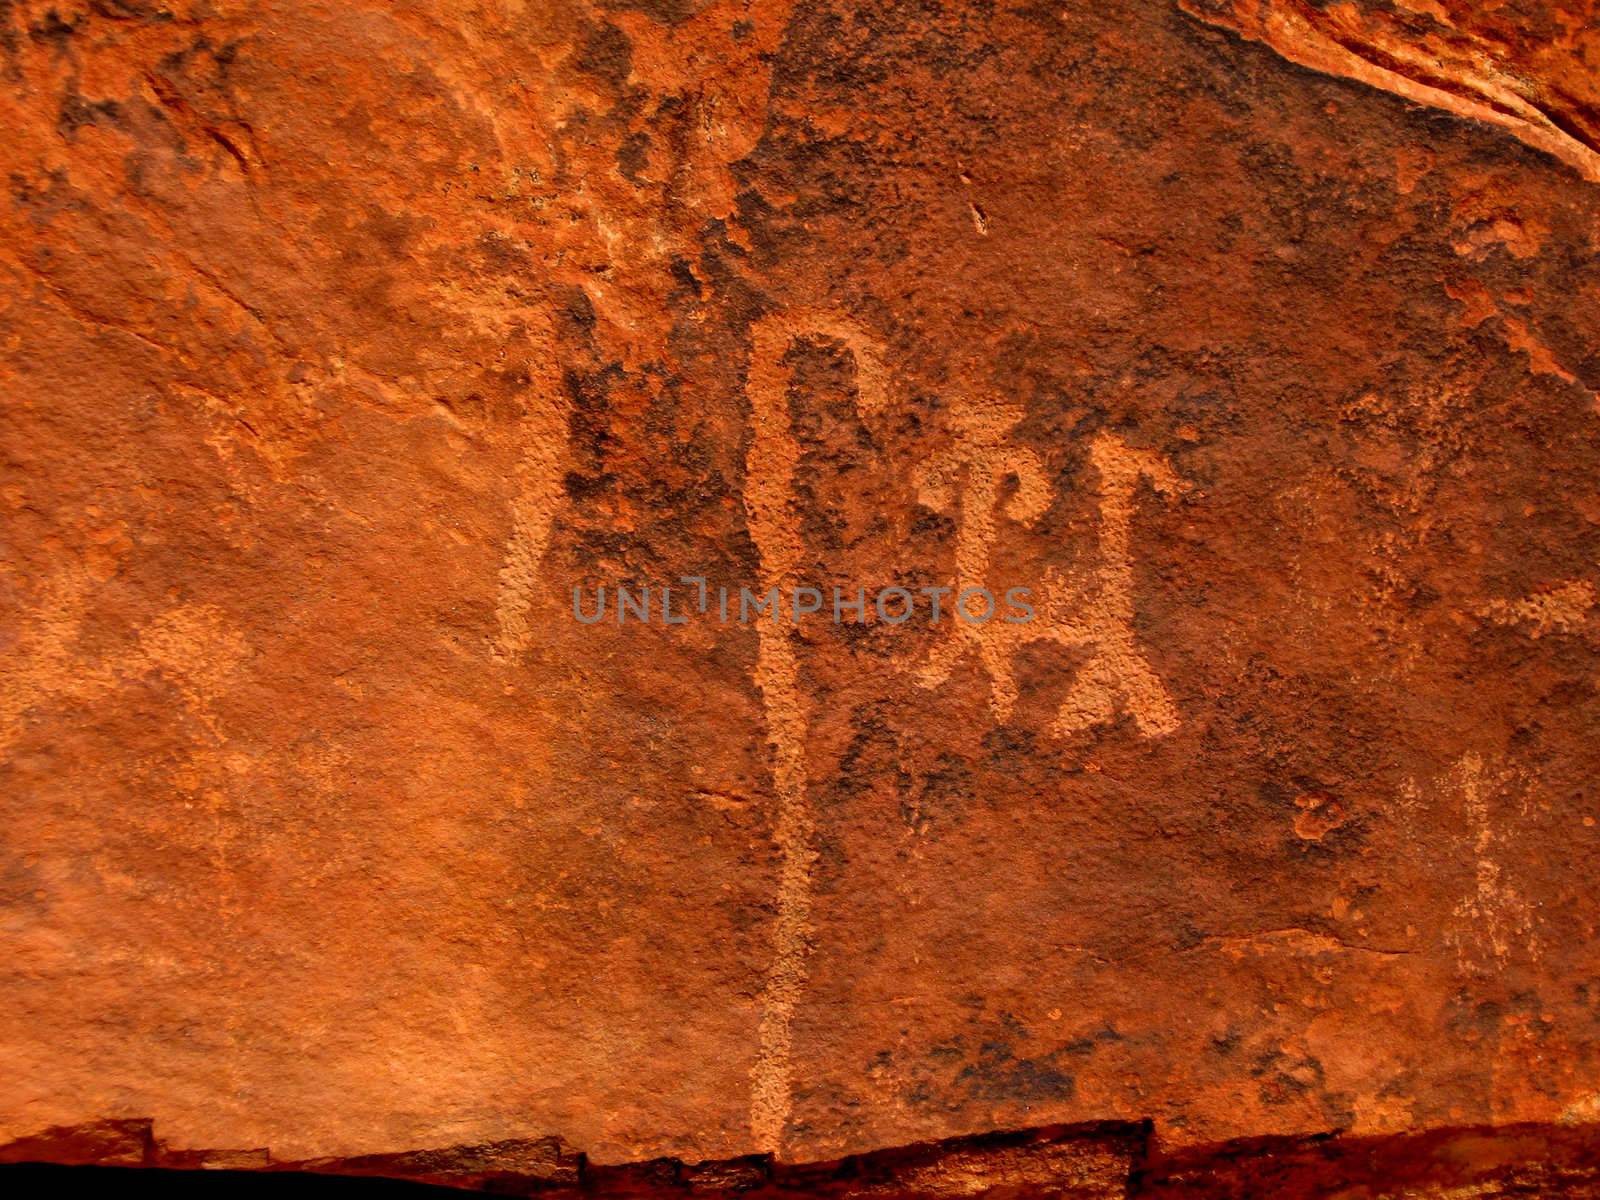 Historic Anasazi petroglyphs in Step Canyon, Utah, USA.